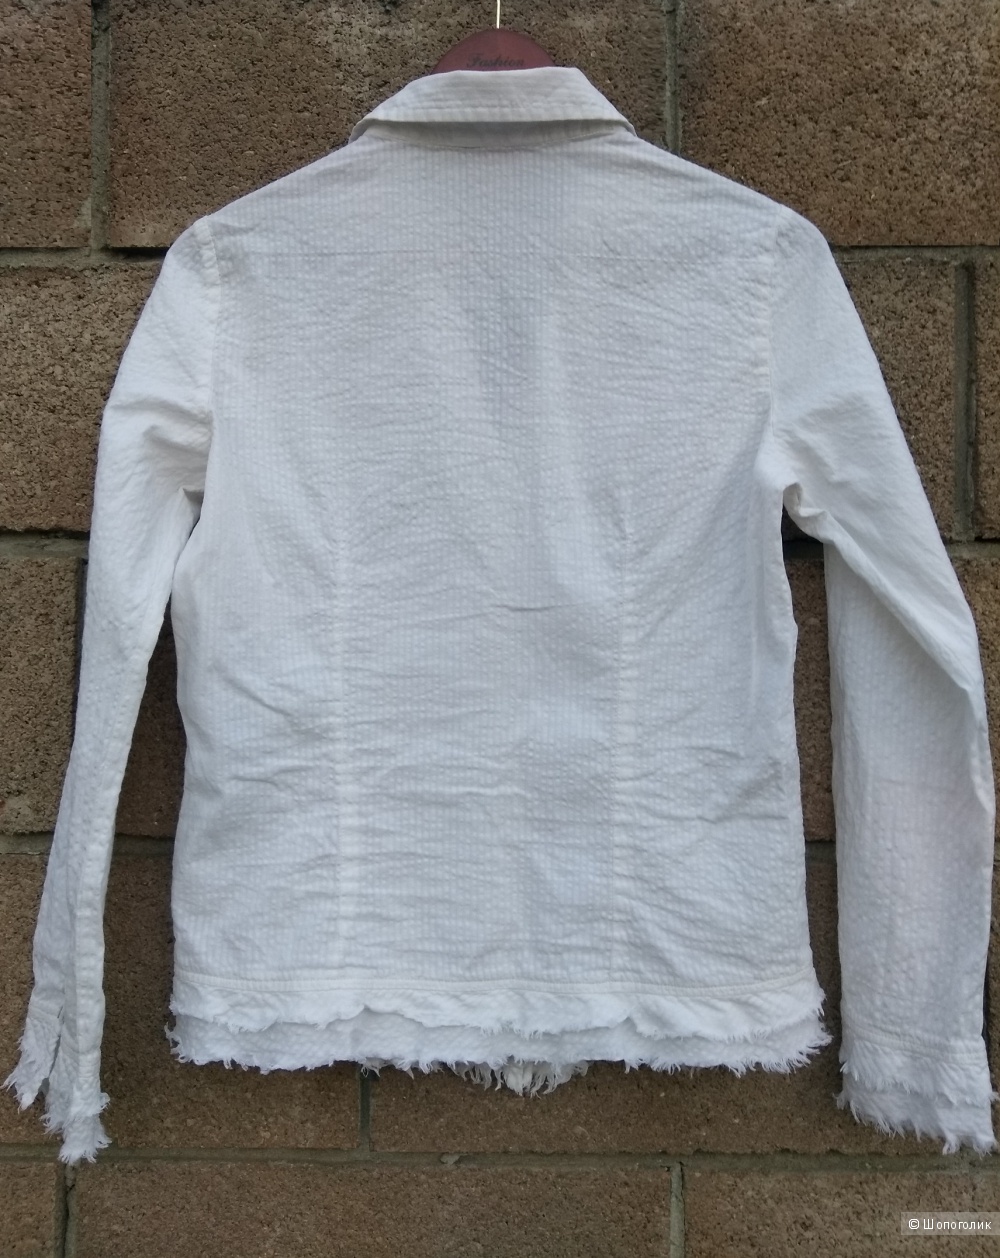 Блузка рубашка Peruna 46 размер